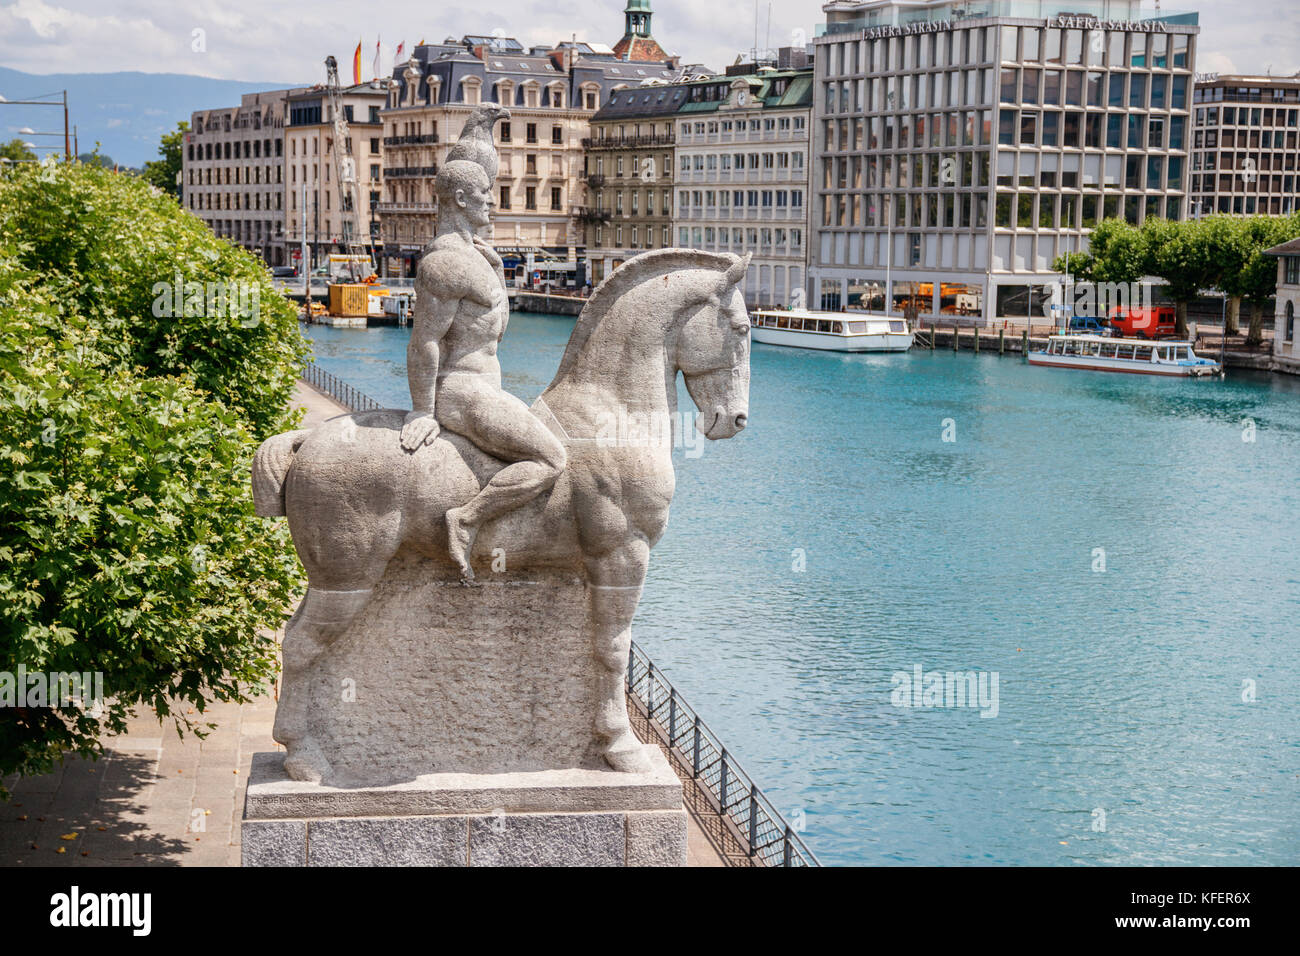 The statue 'Aigle de Geneve' (Eagle of Geneva) at the Quai Turrettini with the Rhone river at the background on a sunny day. Geneva, Switzerland. Stock Photo